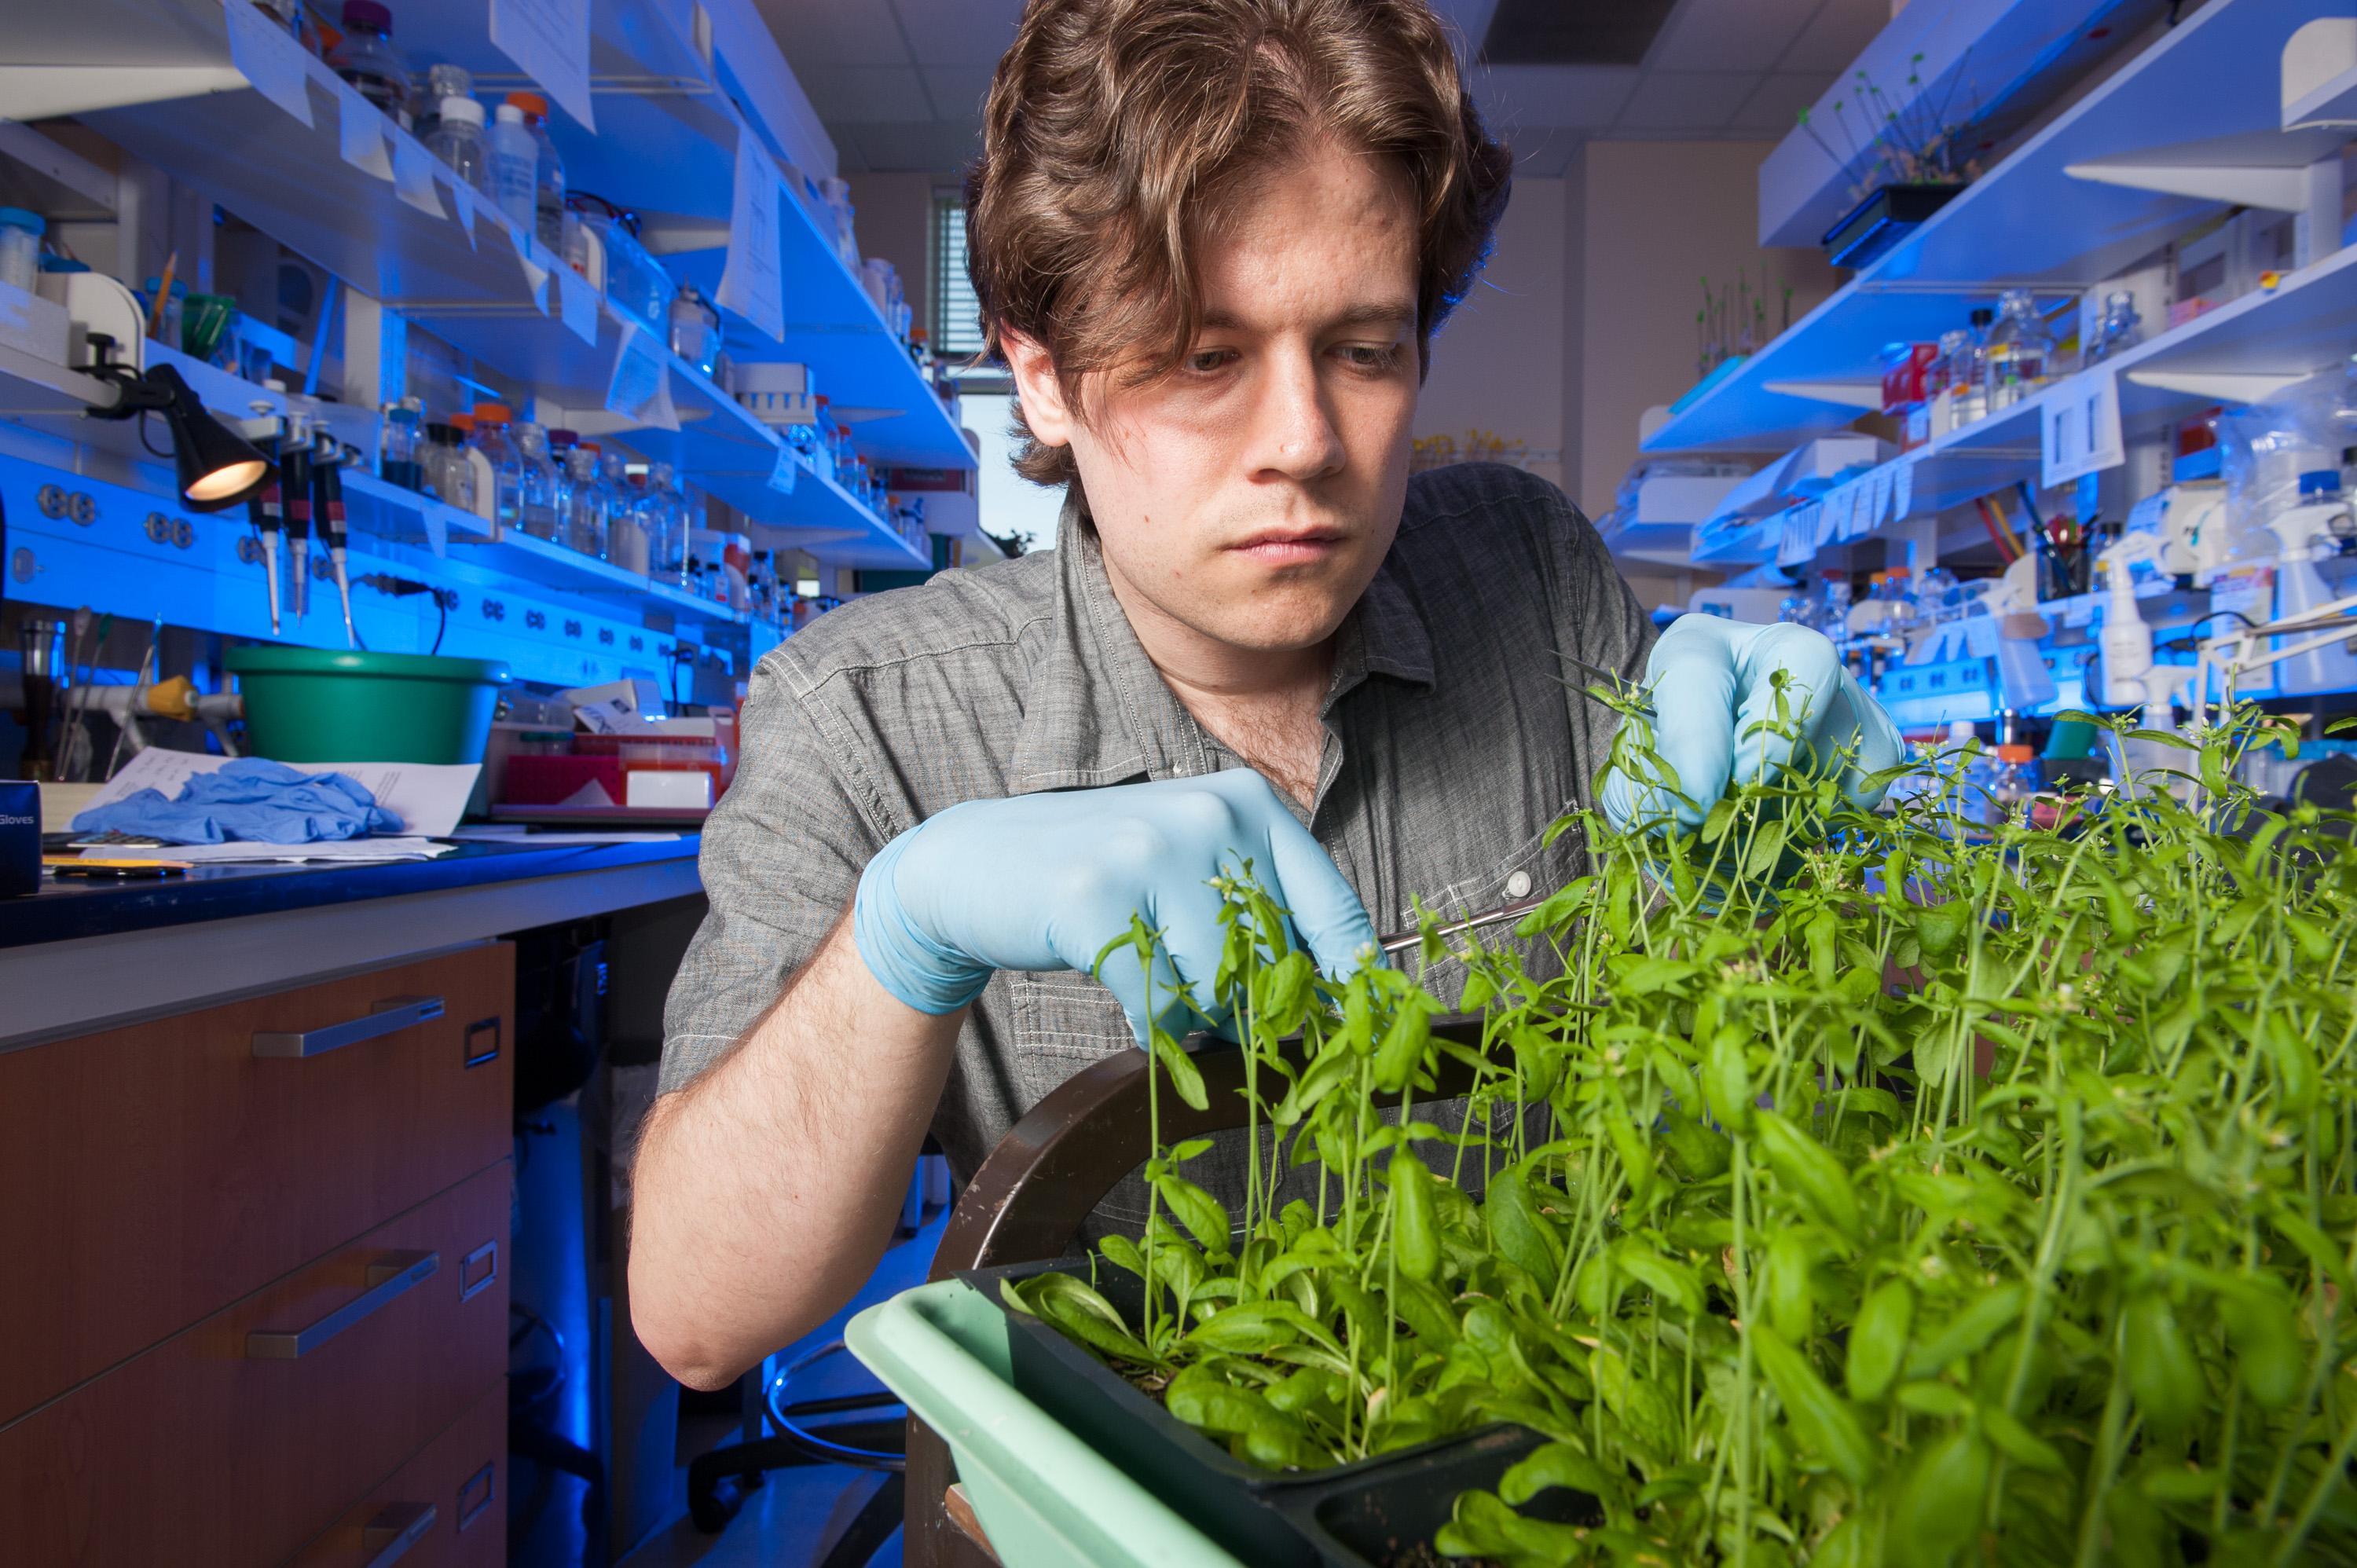 Graduate Student cutting plant in lab